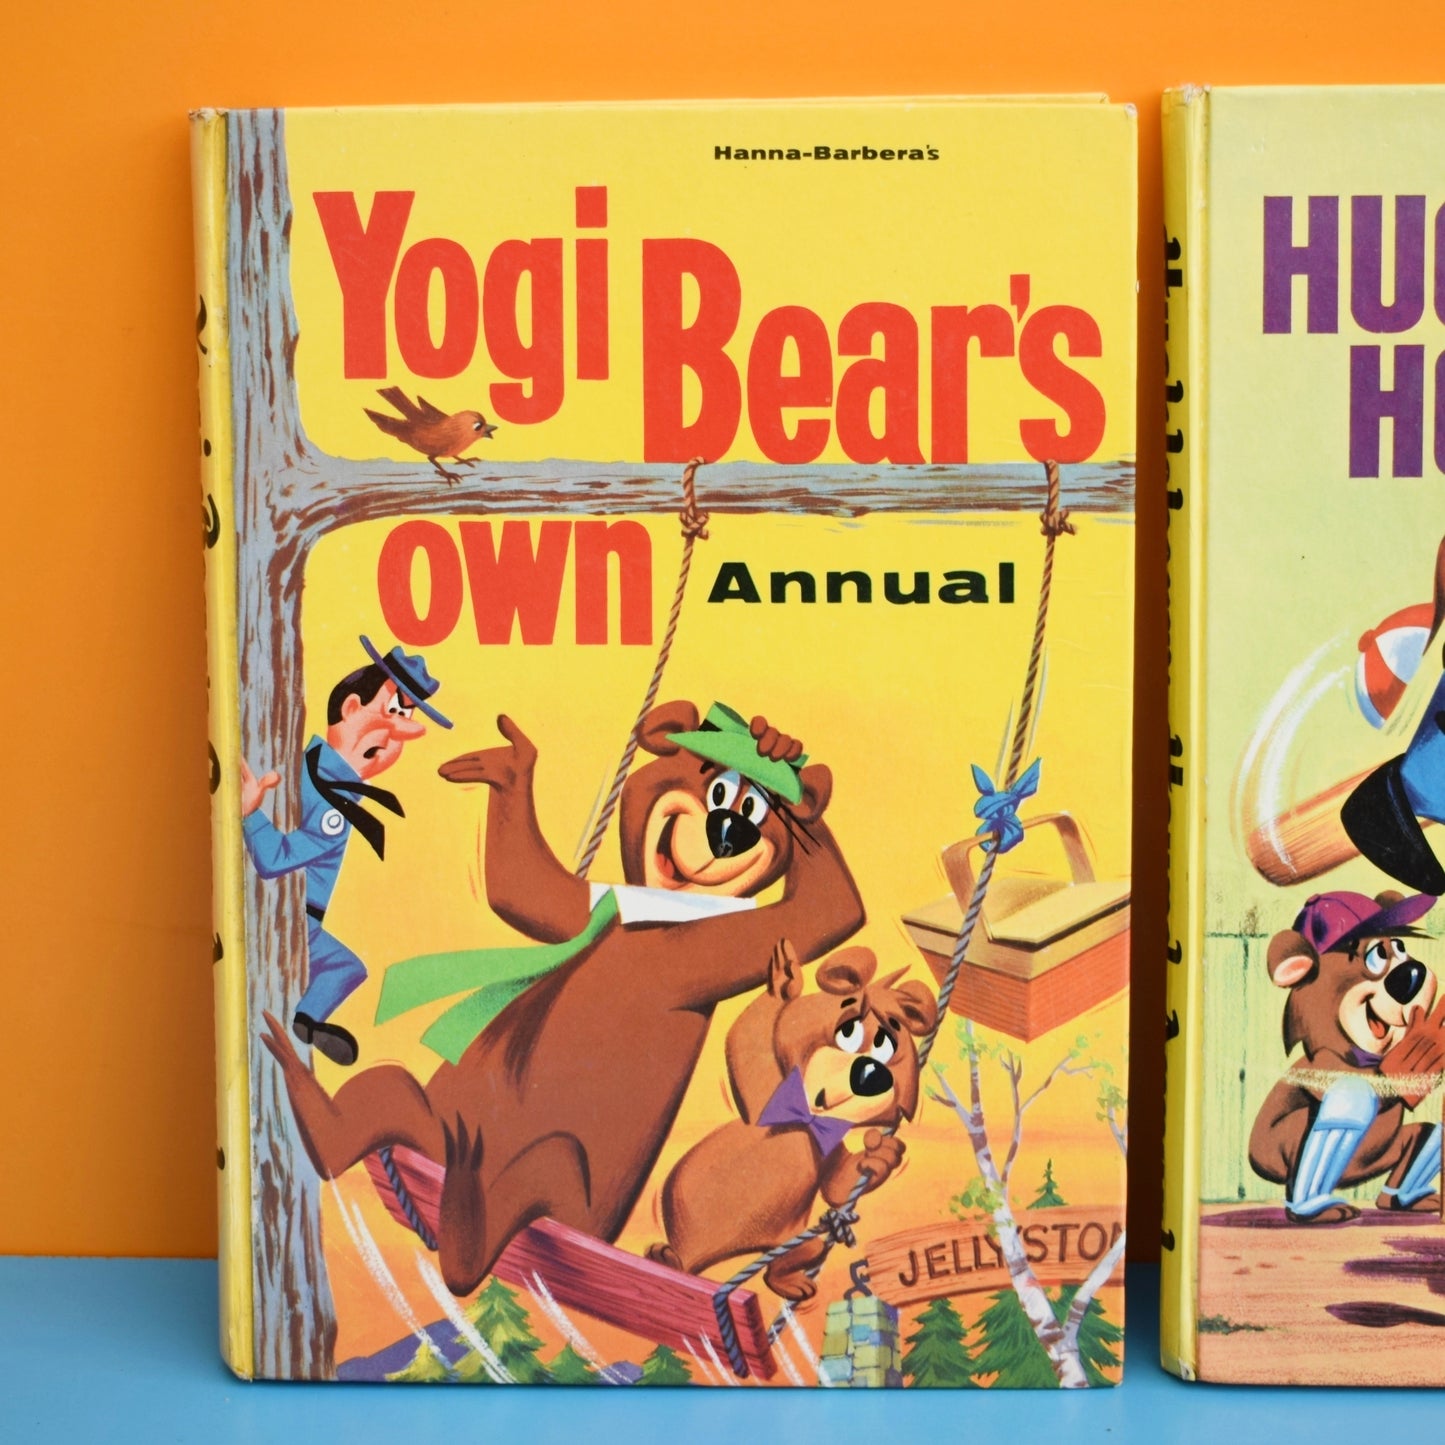 Vintage 1960s Annuals/ Books - Huckleberry Hound/ Yogi Bear